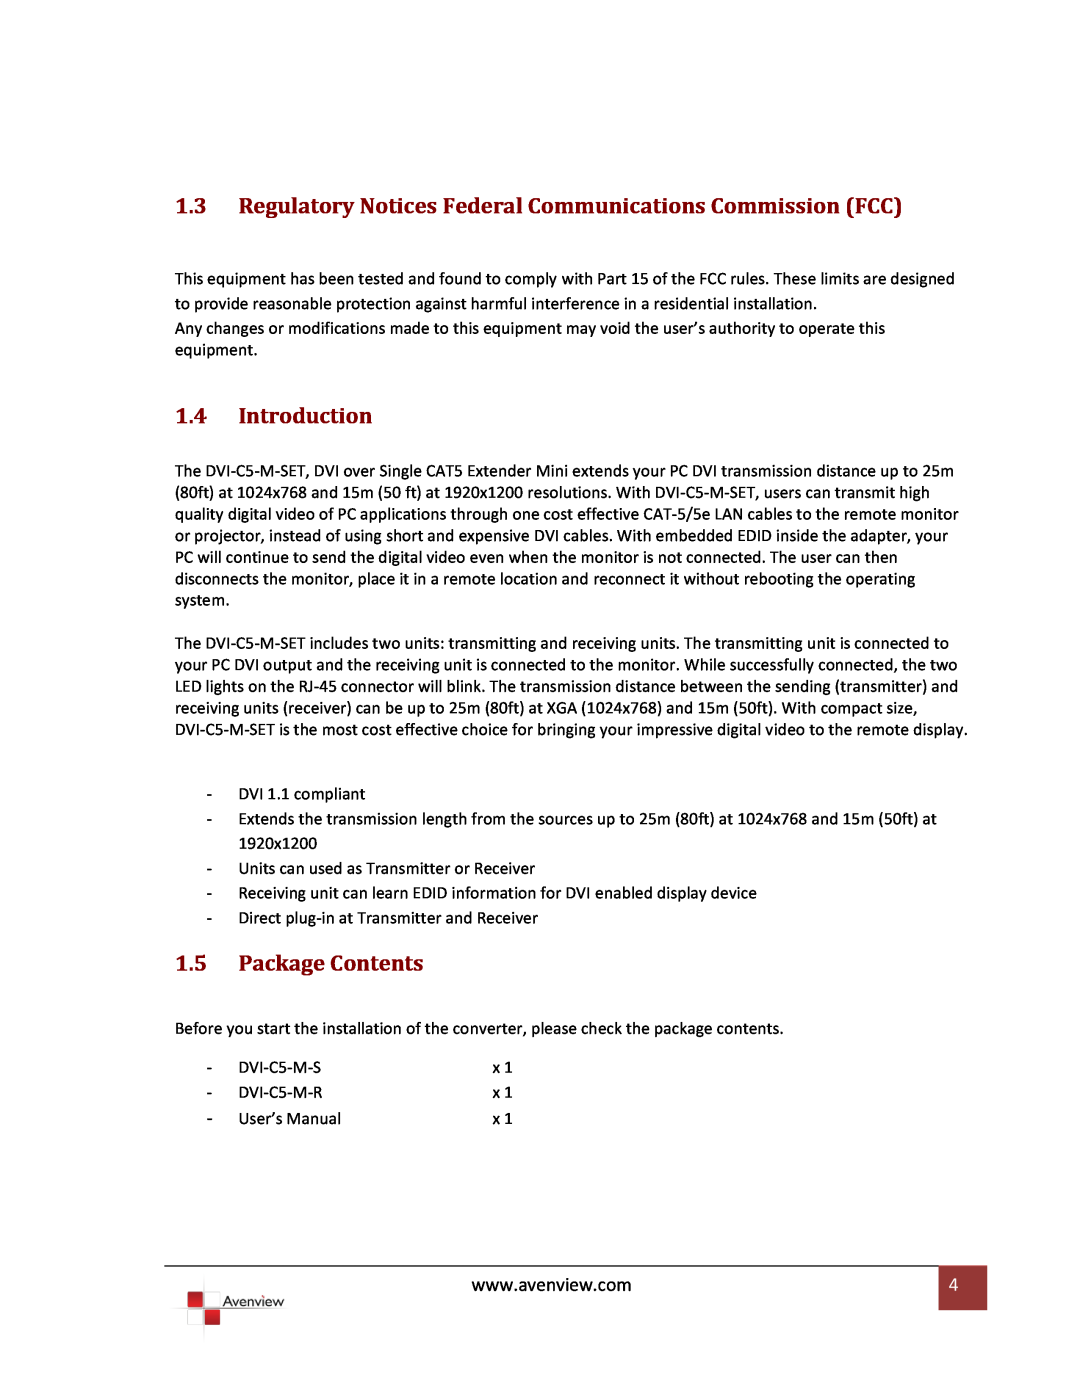 Avenview DVI-C5-M-SET Regulatory Notices Federal Communications Commission FCC, Introduction, Package Contents 